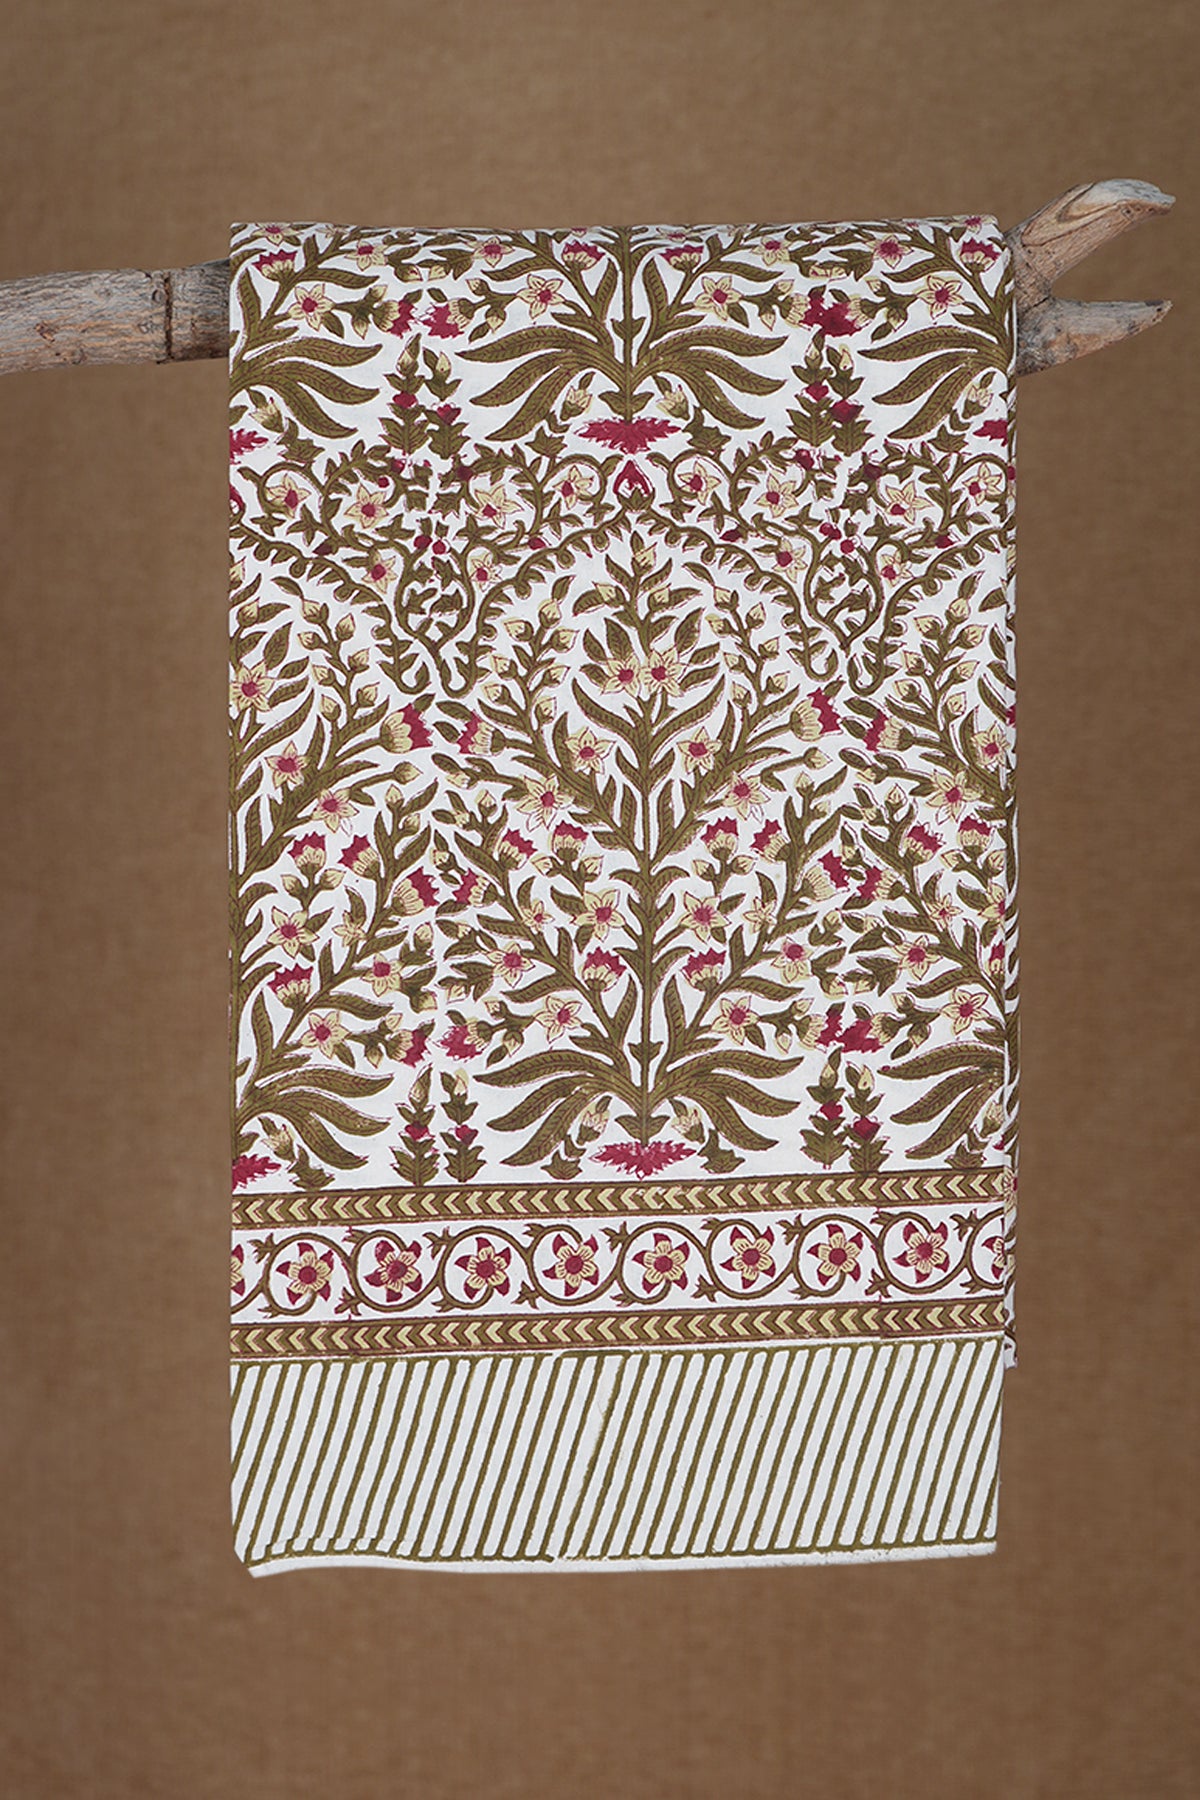 Allover Floral Printed White Cotton Single Bedspread